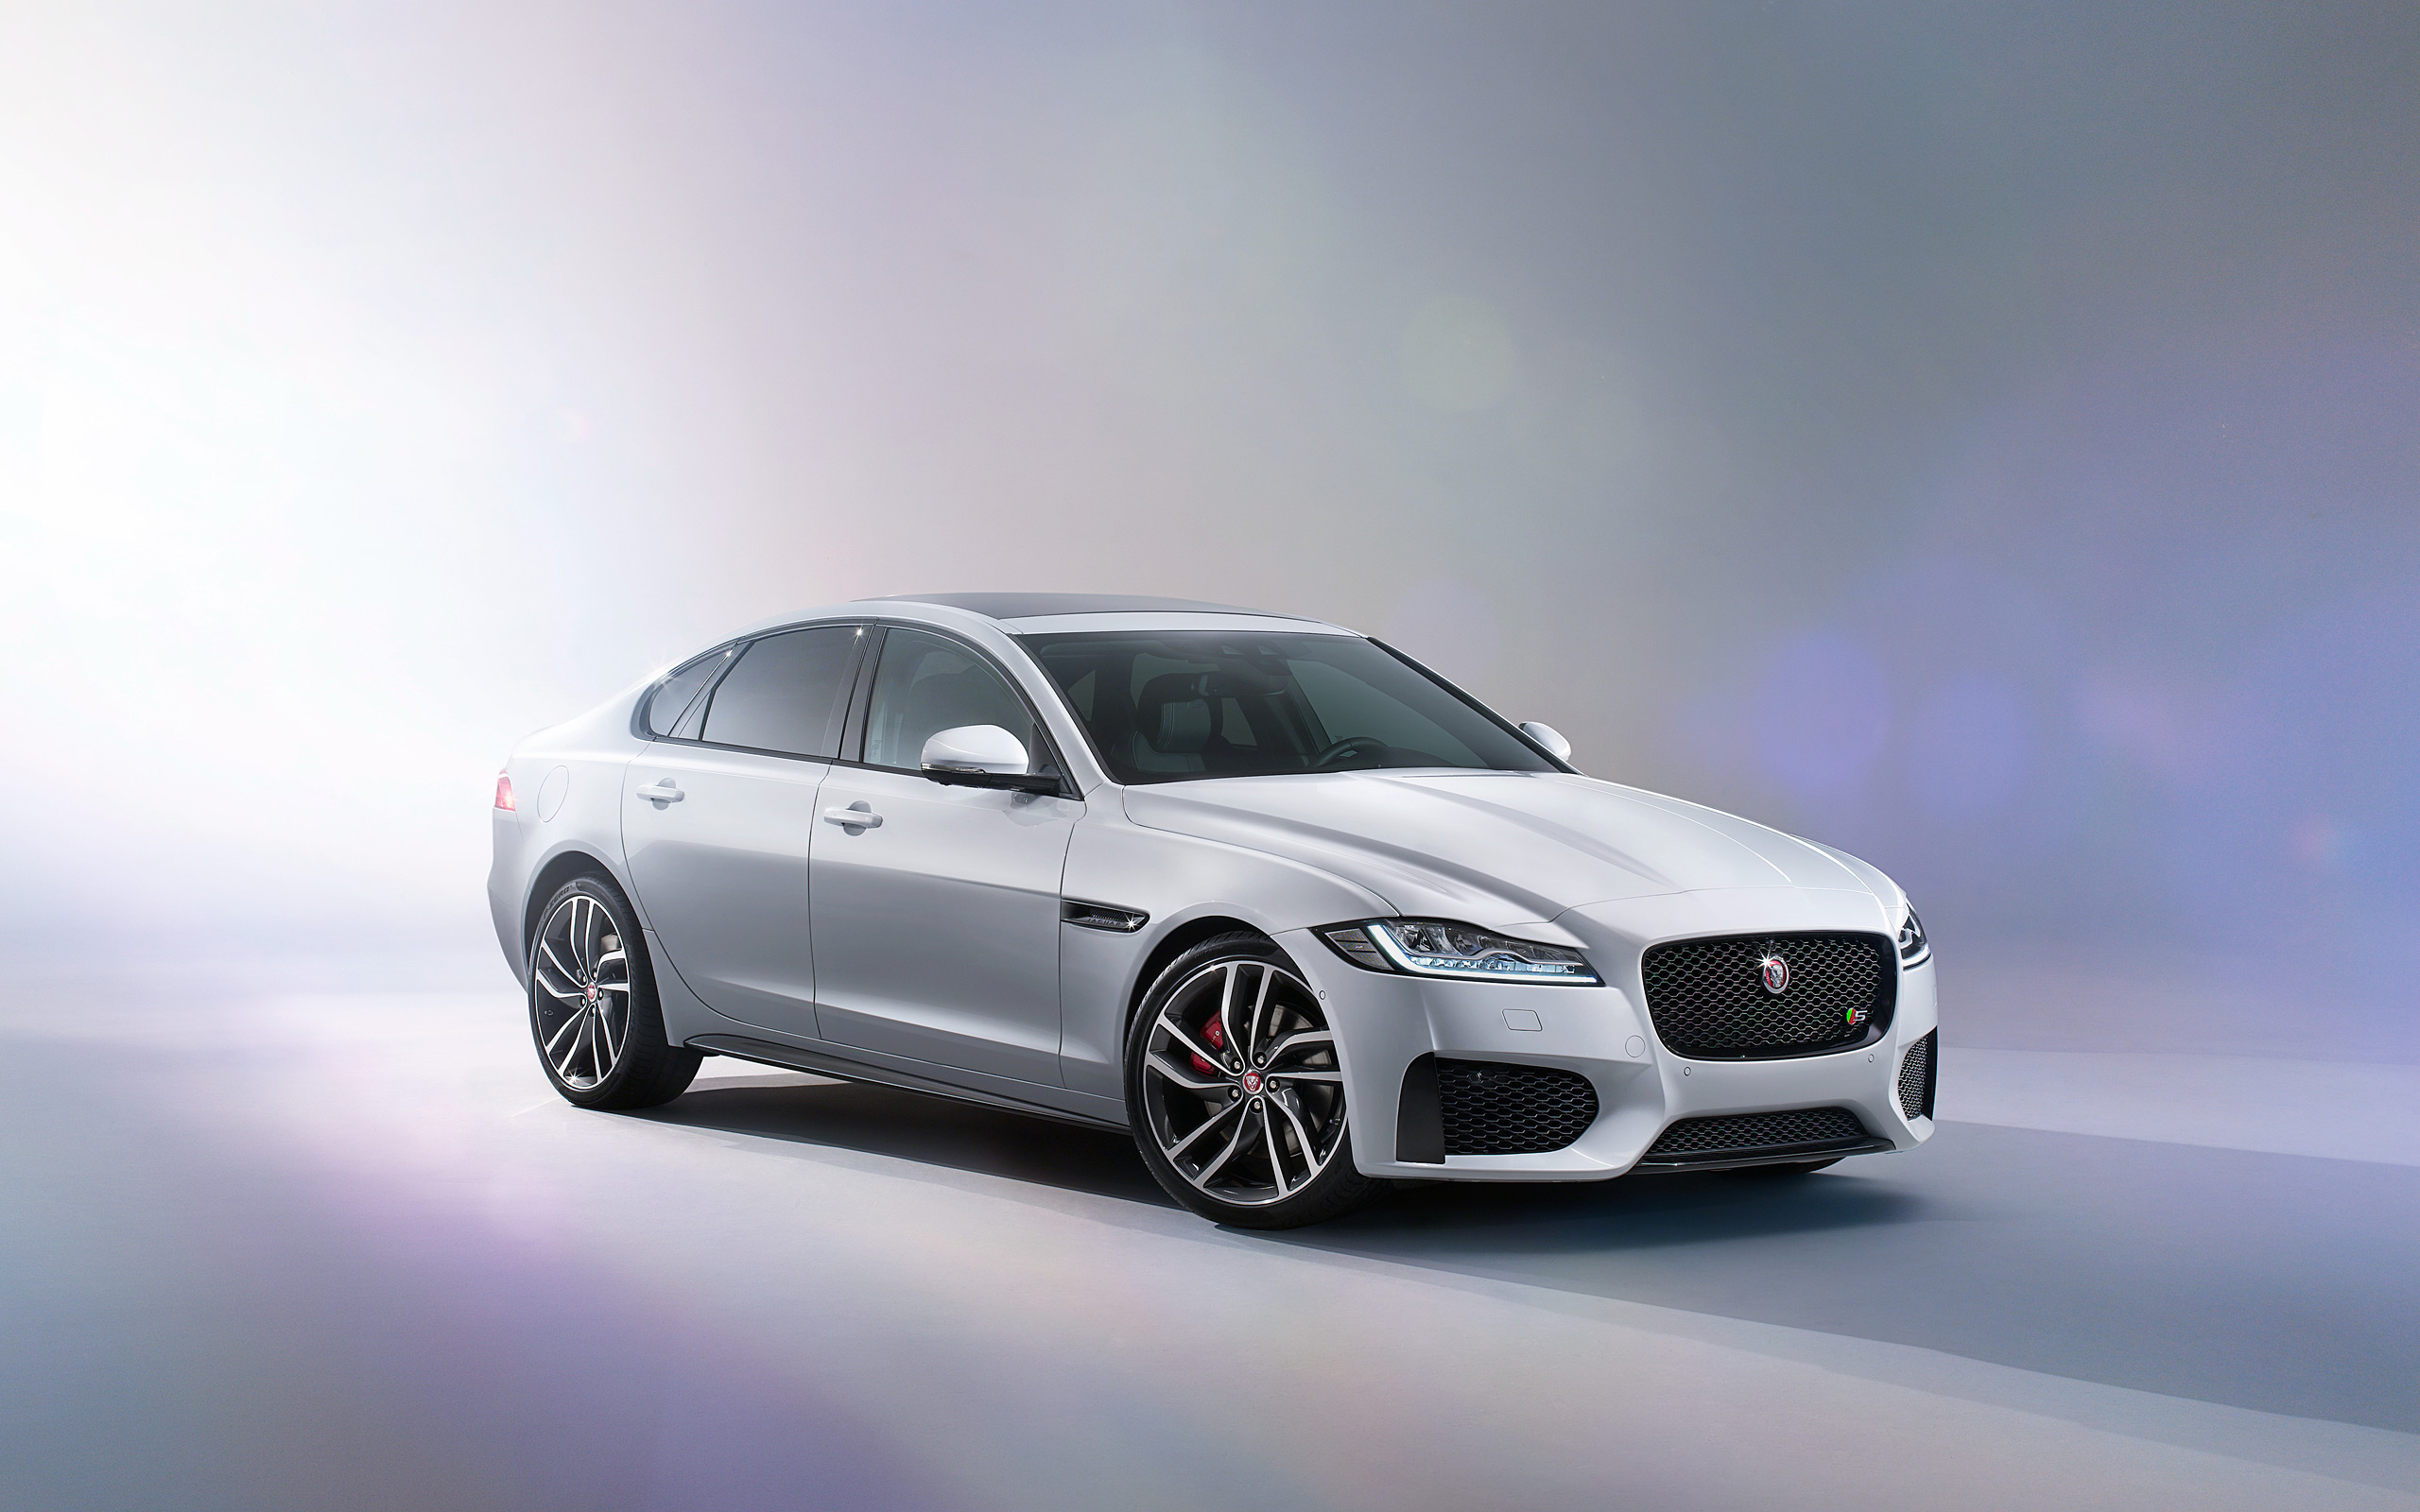 2016, Jaguar XF, Luxury Car wallpaper | cars | Wallpaper ...